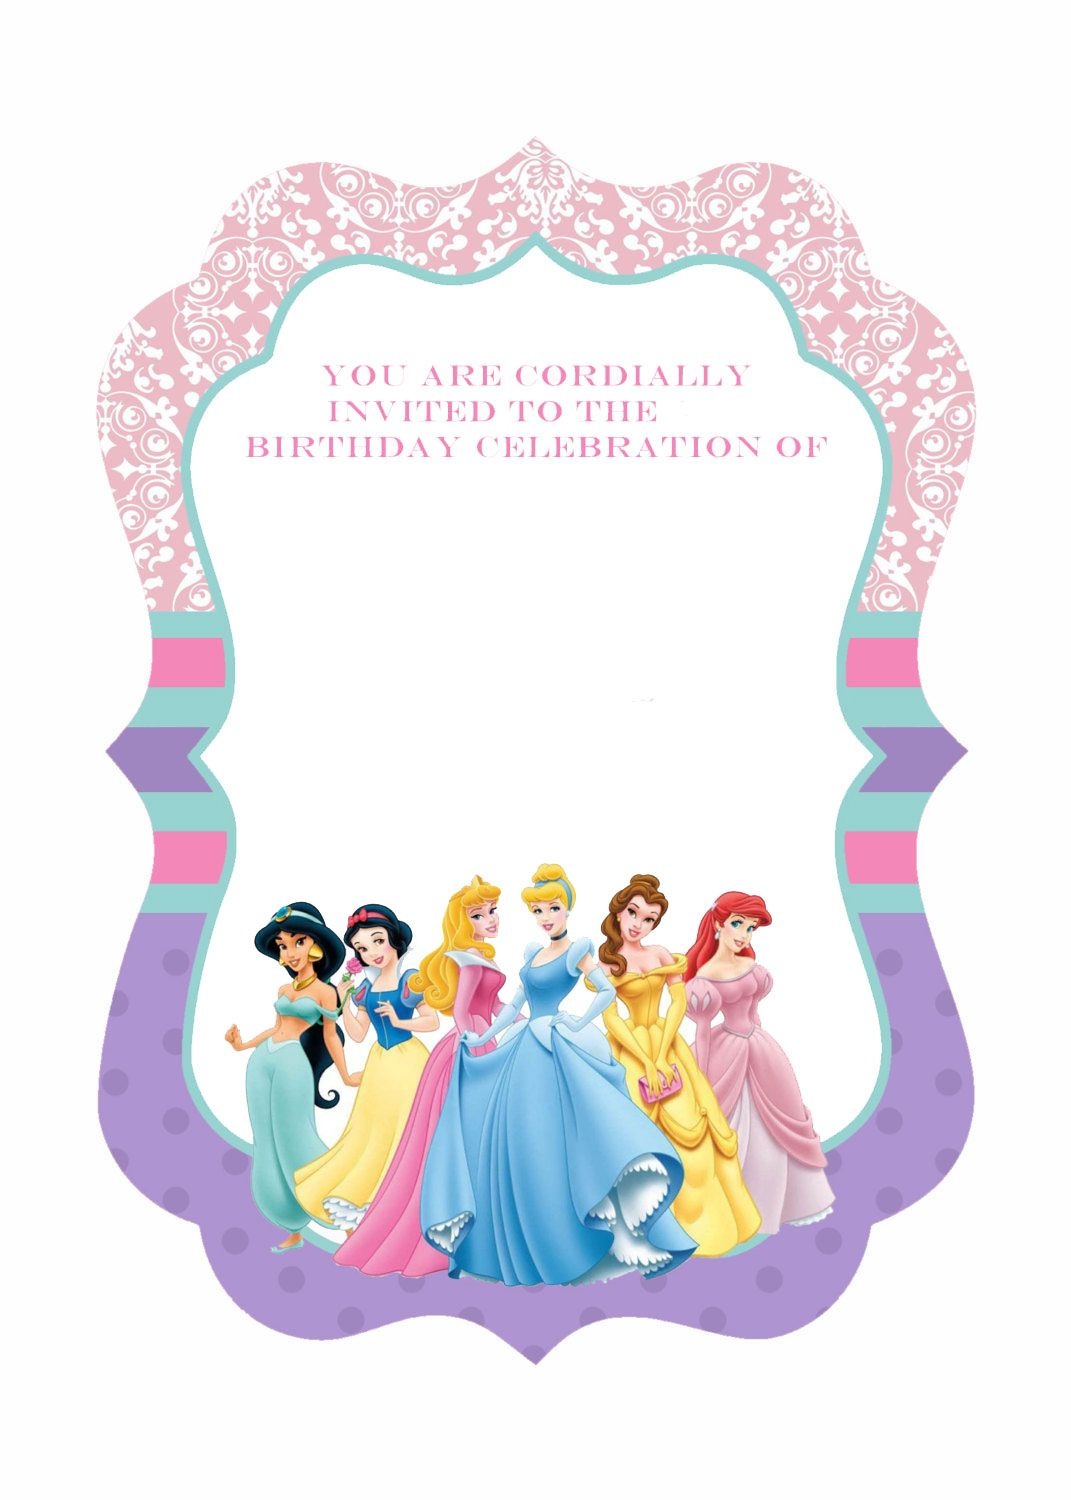 Cool Free Template Free Printable Ornate Disney Princesses - Free Printable Disney Invitations